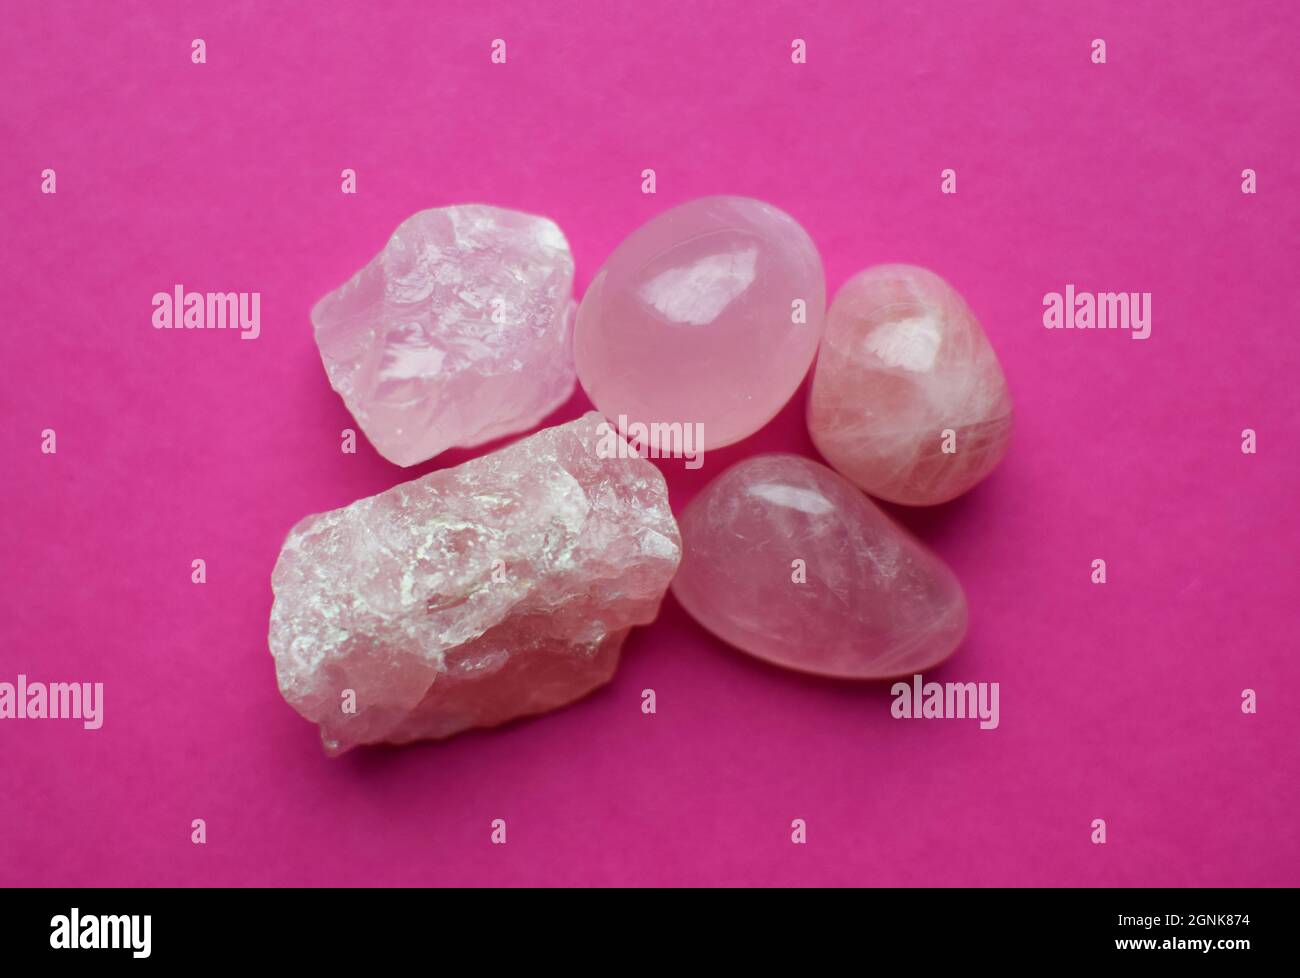 Crystals of rose quartz on a bright pink background. Beautiful semi-precious stones Stock Photo